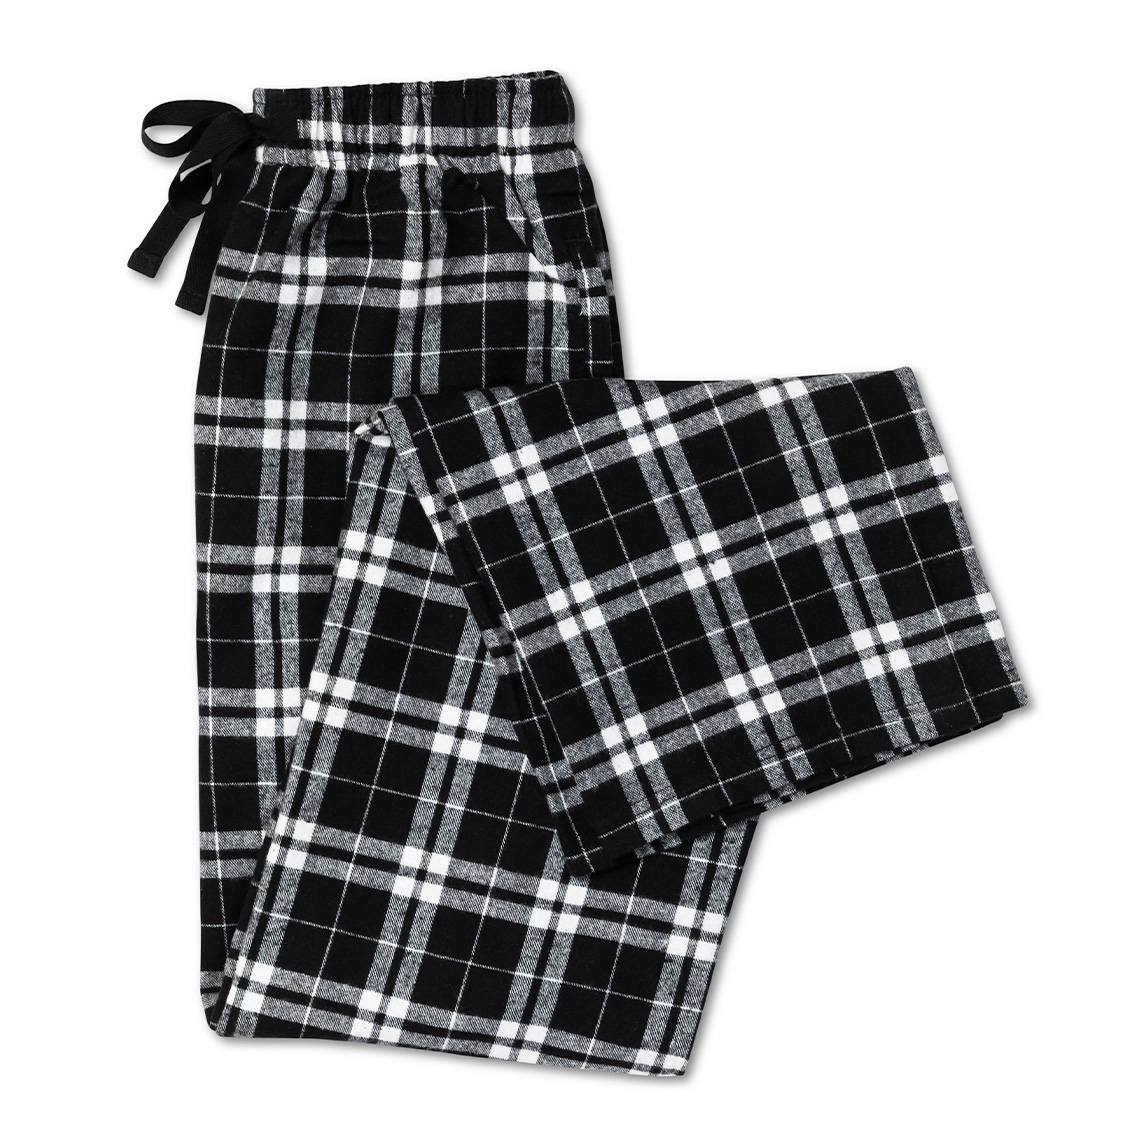 Pajama Pants, Apparel